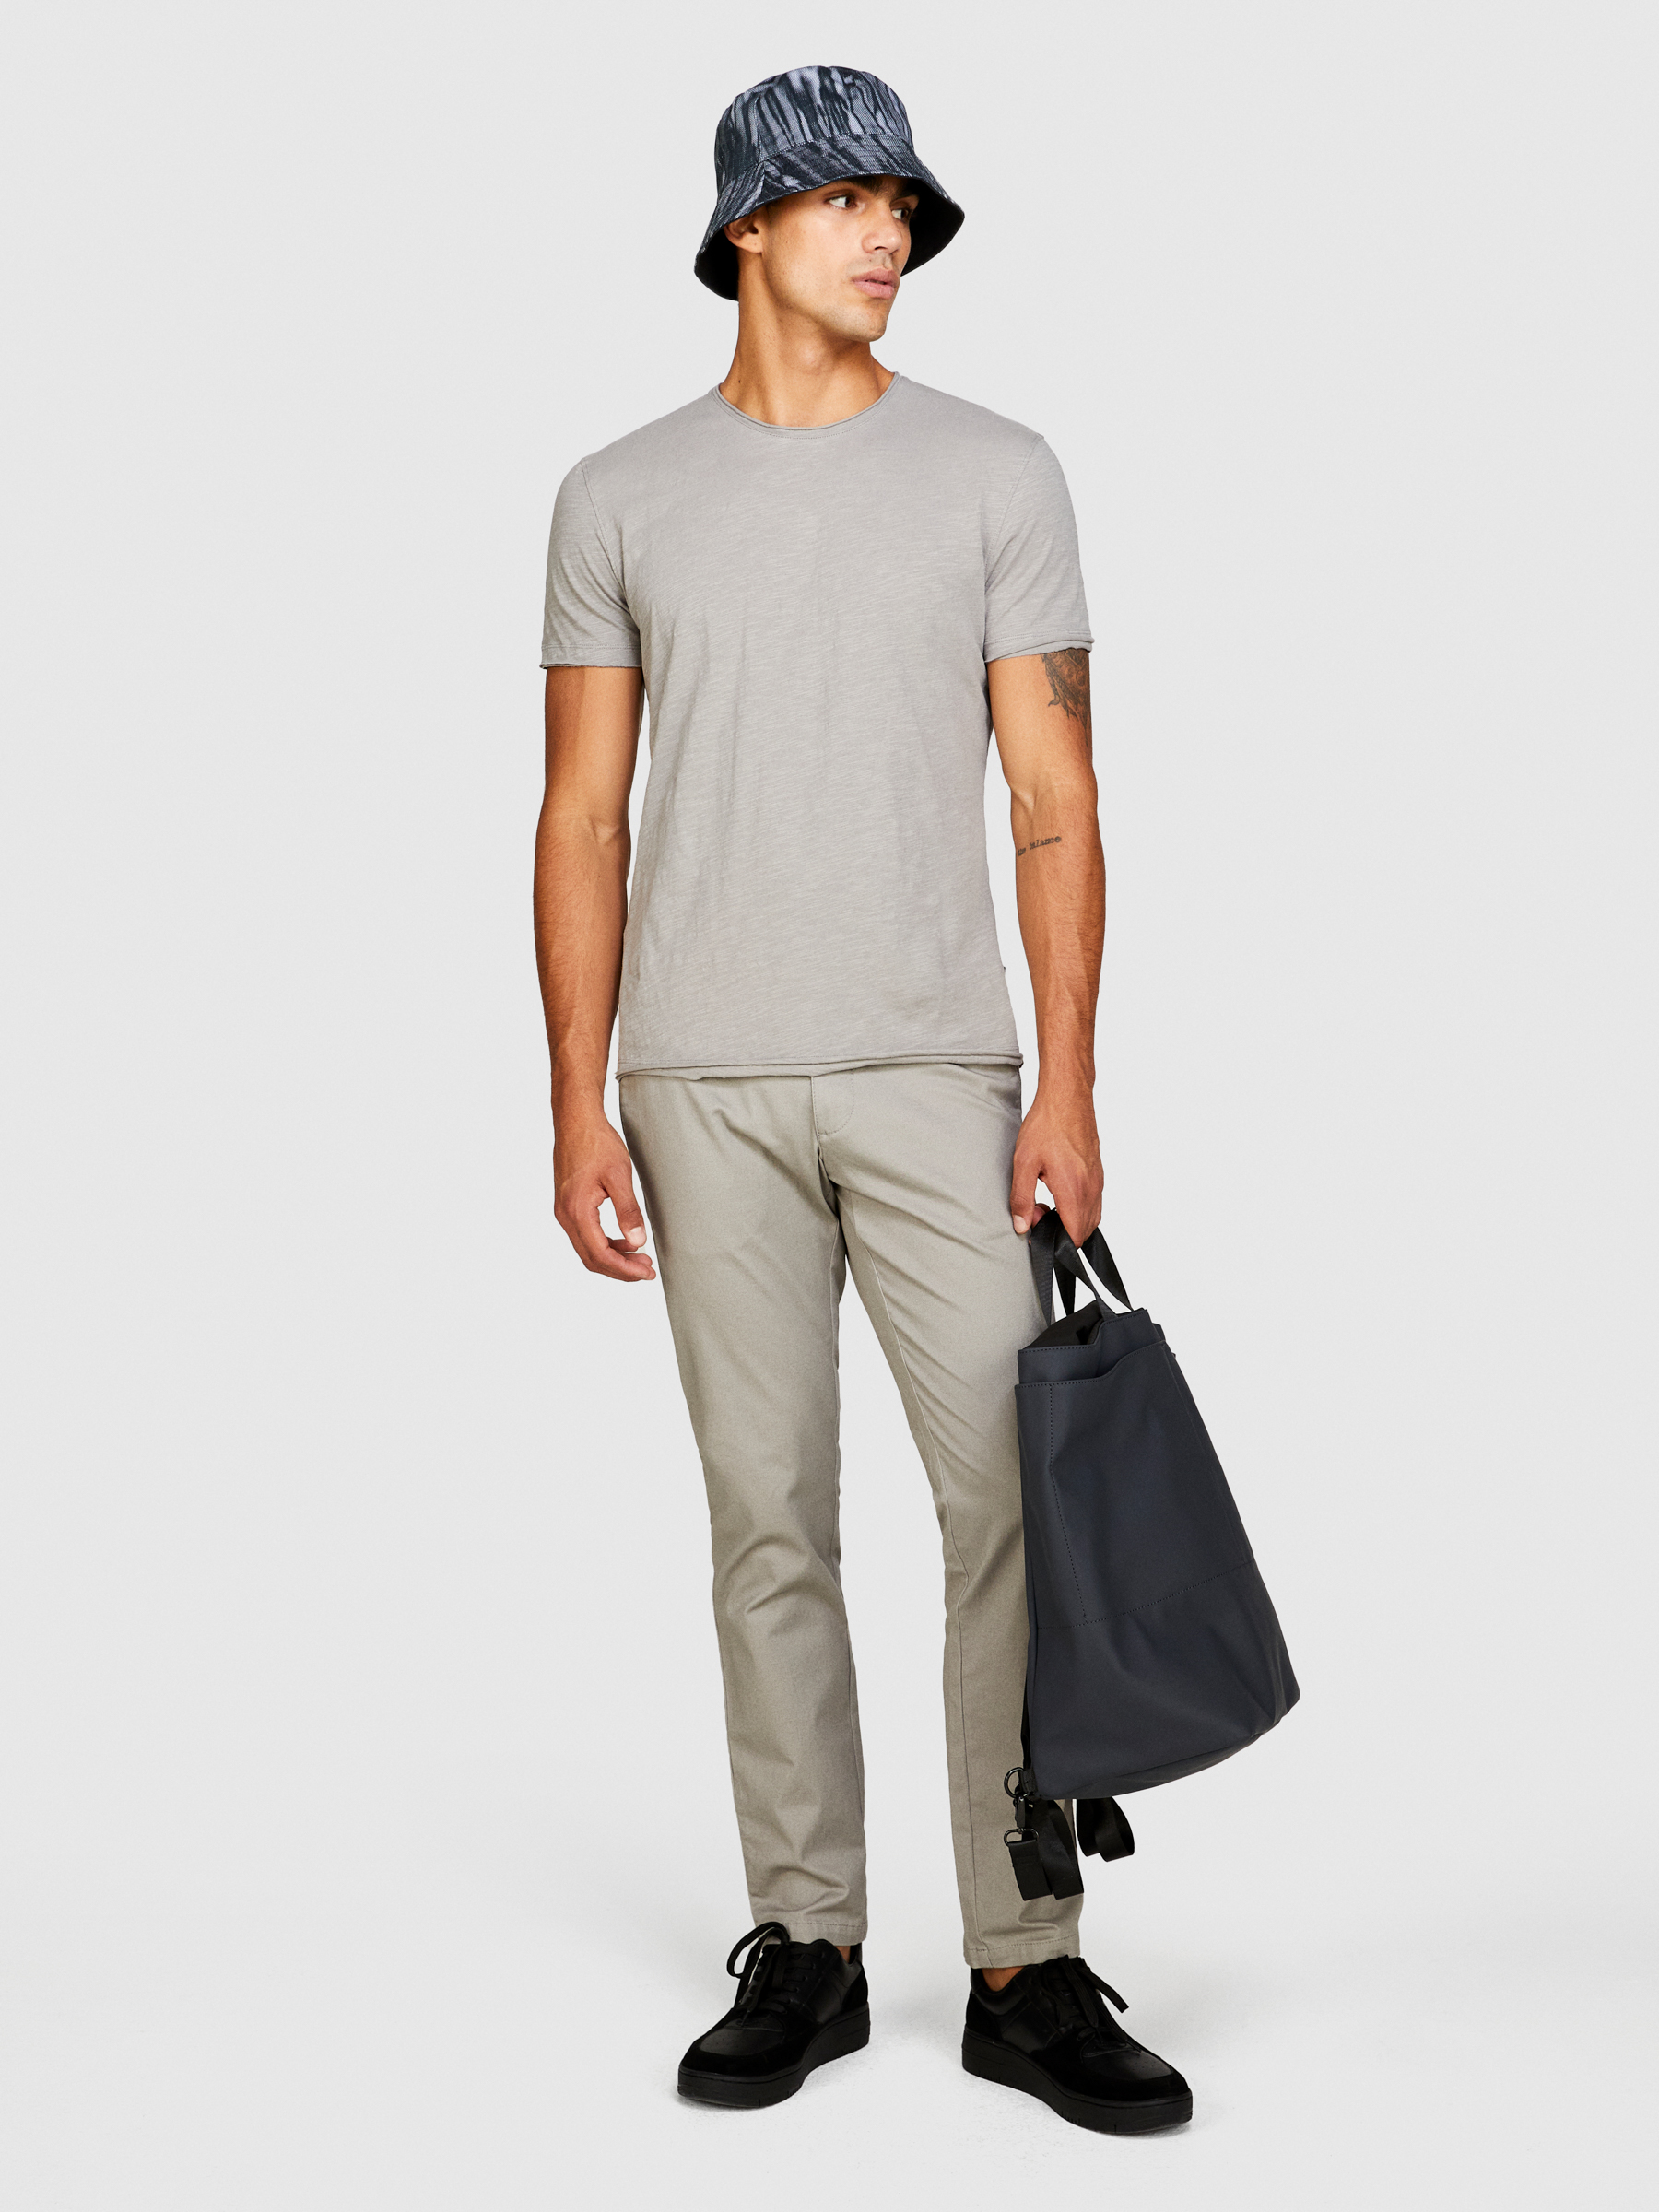 Sisley - Slim Fit T-shirt, Man, Light Gray, Size: L